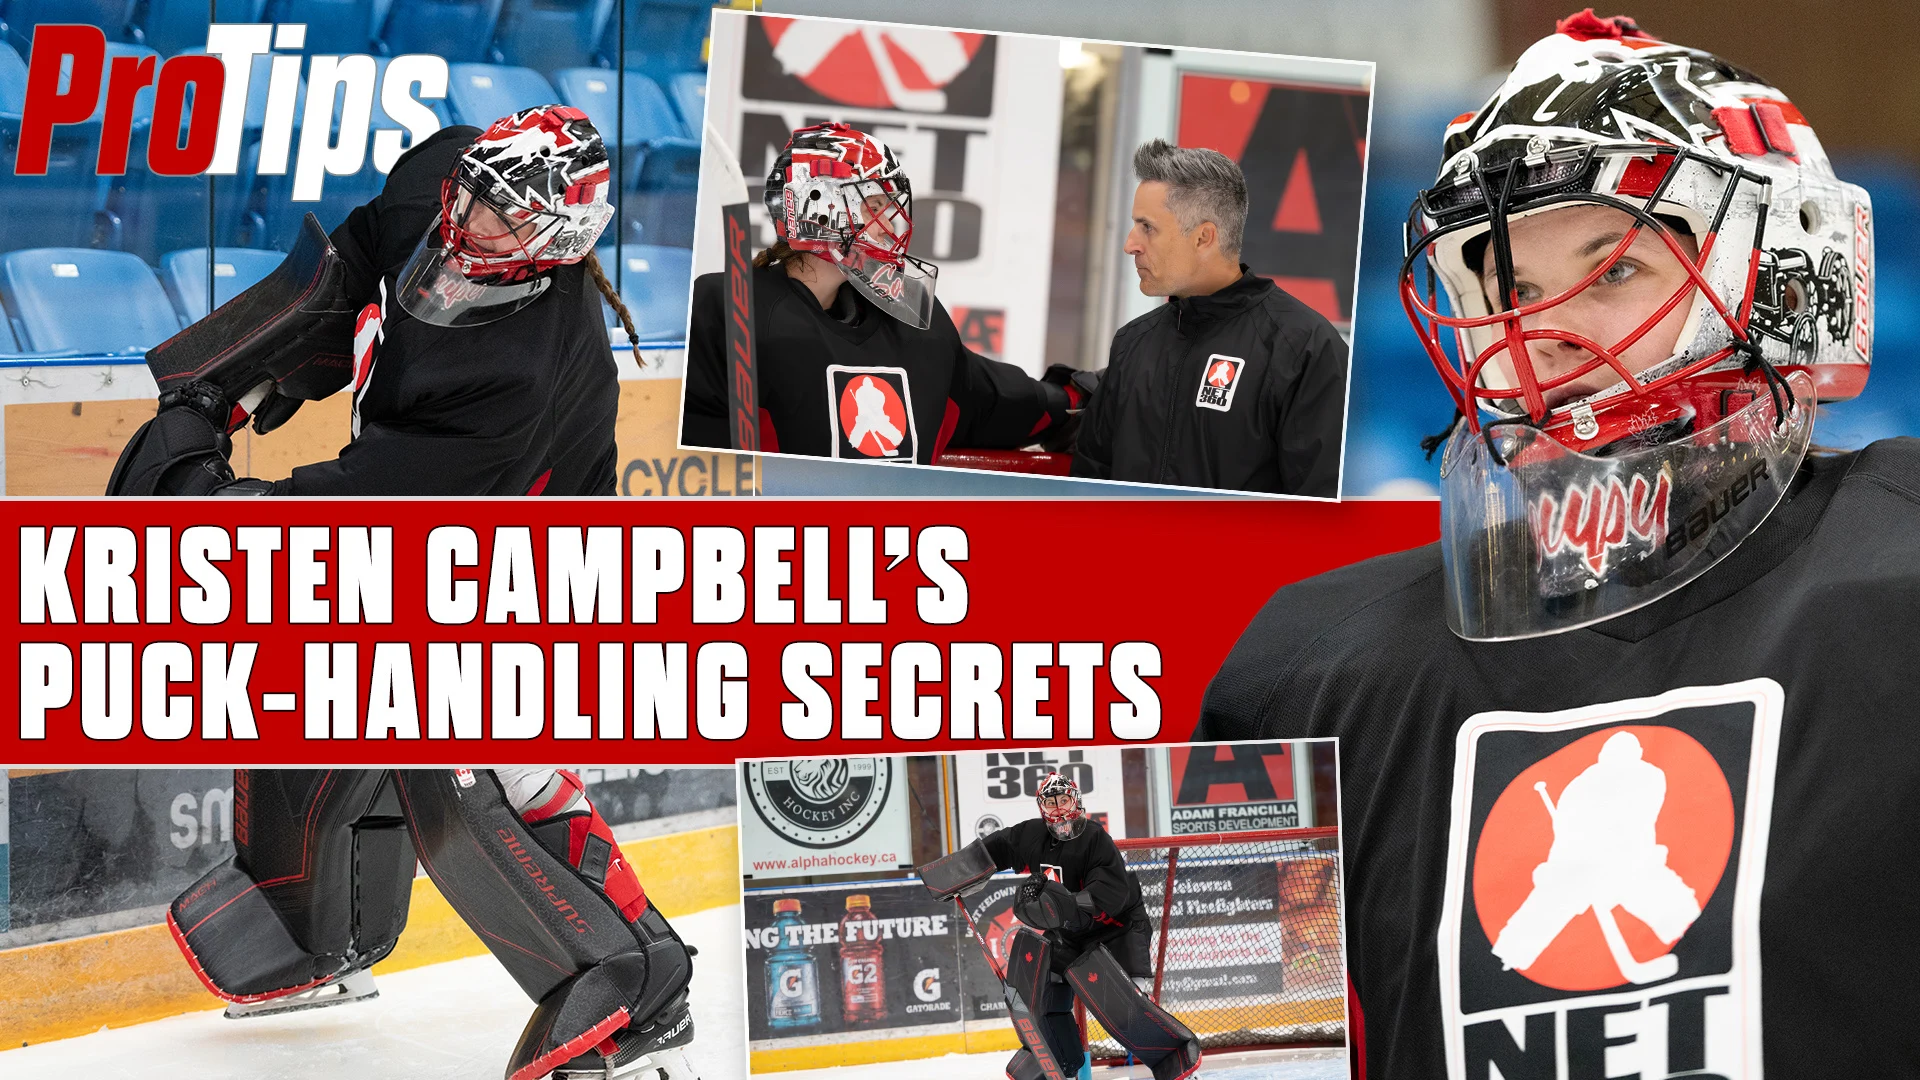 Pro Tips: Kristen Campbell’s Puck-Handling Secrets